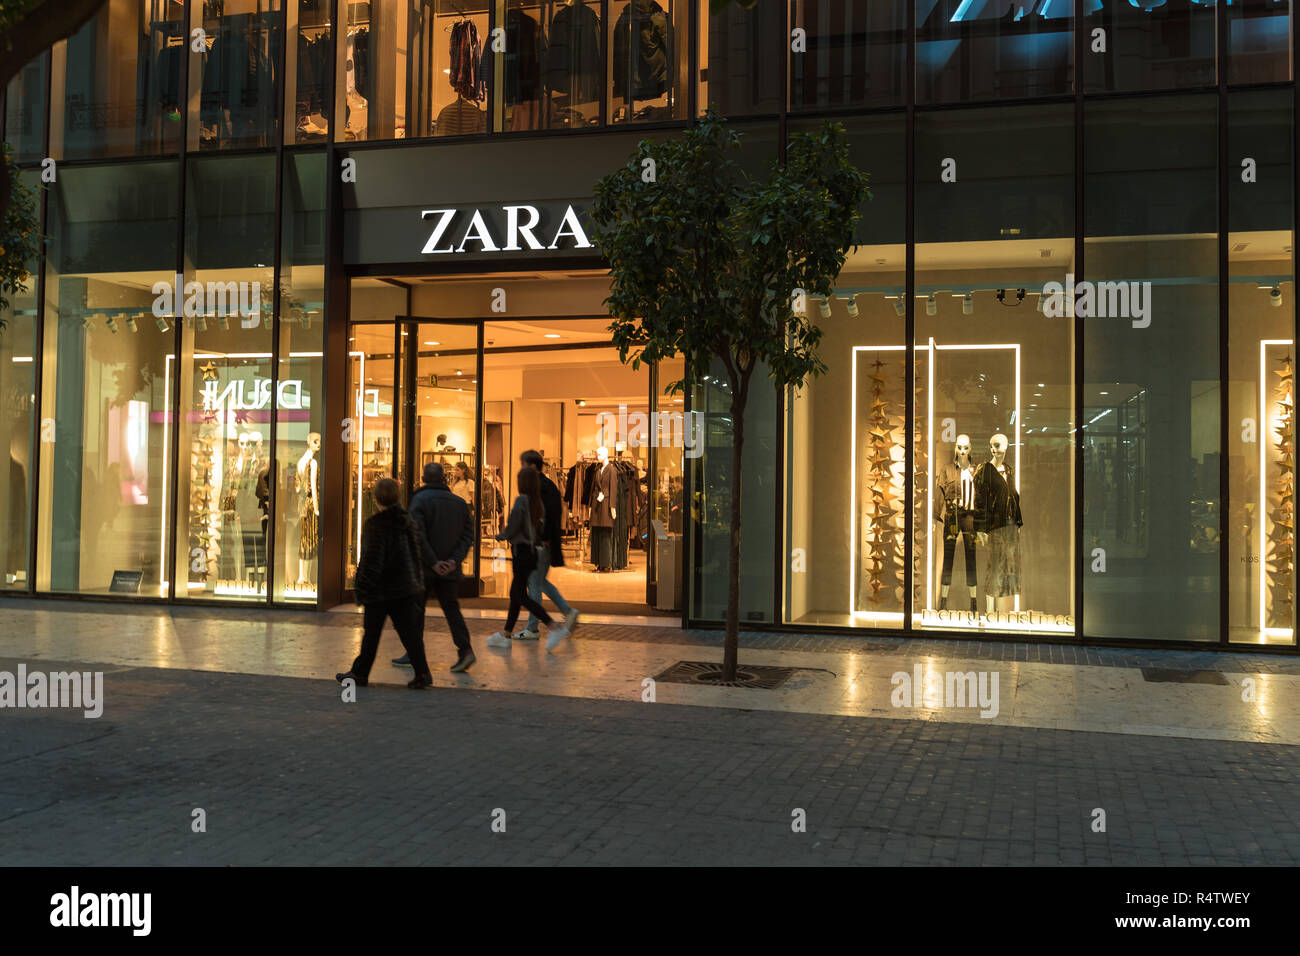 Zara Clothing Stock Photos & Zara Clothing Stock Images - Alamy